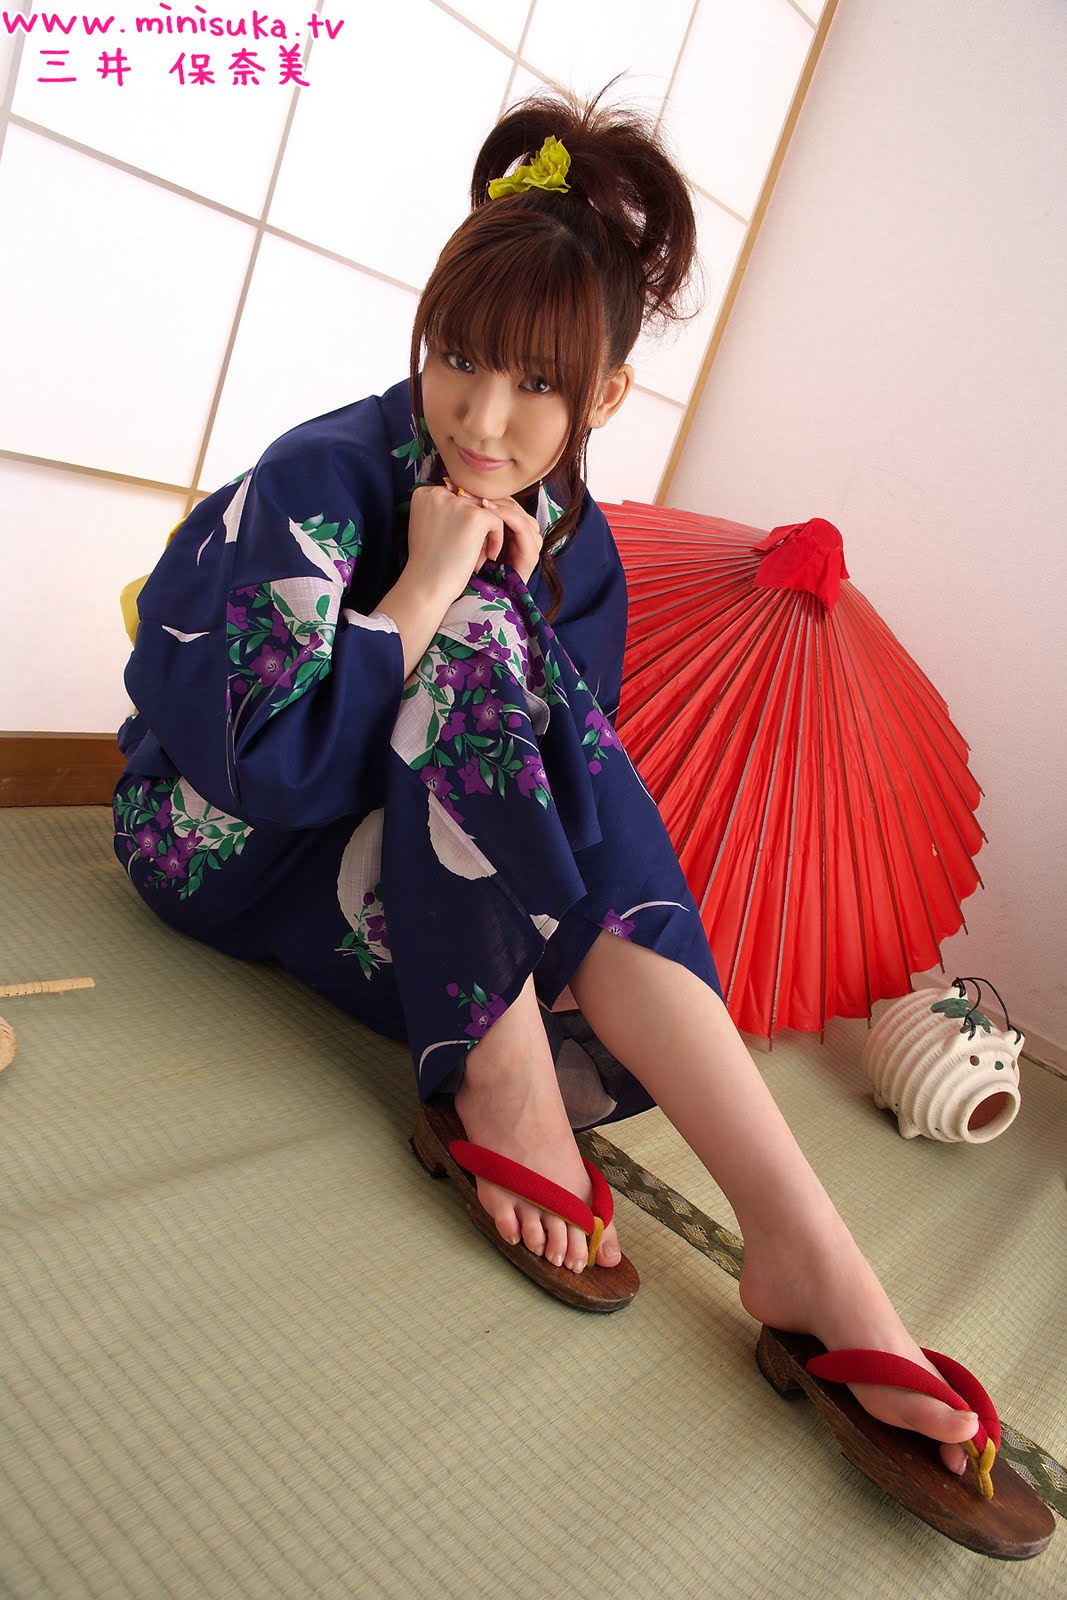 Honami Mitsui In Kimono Japanese Girls 2011